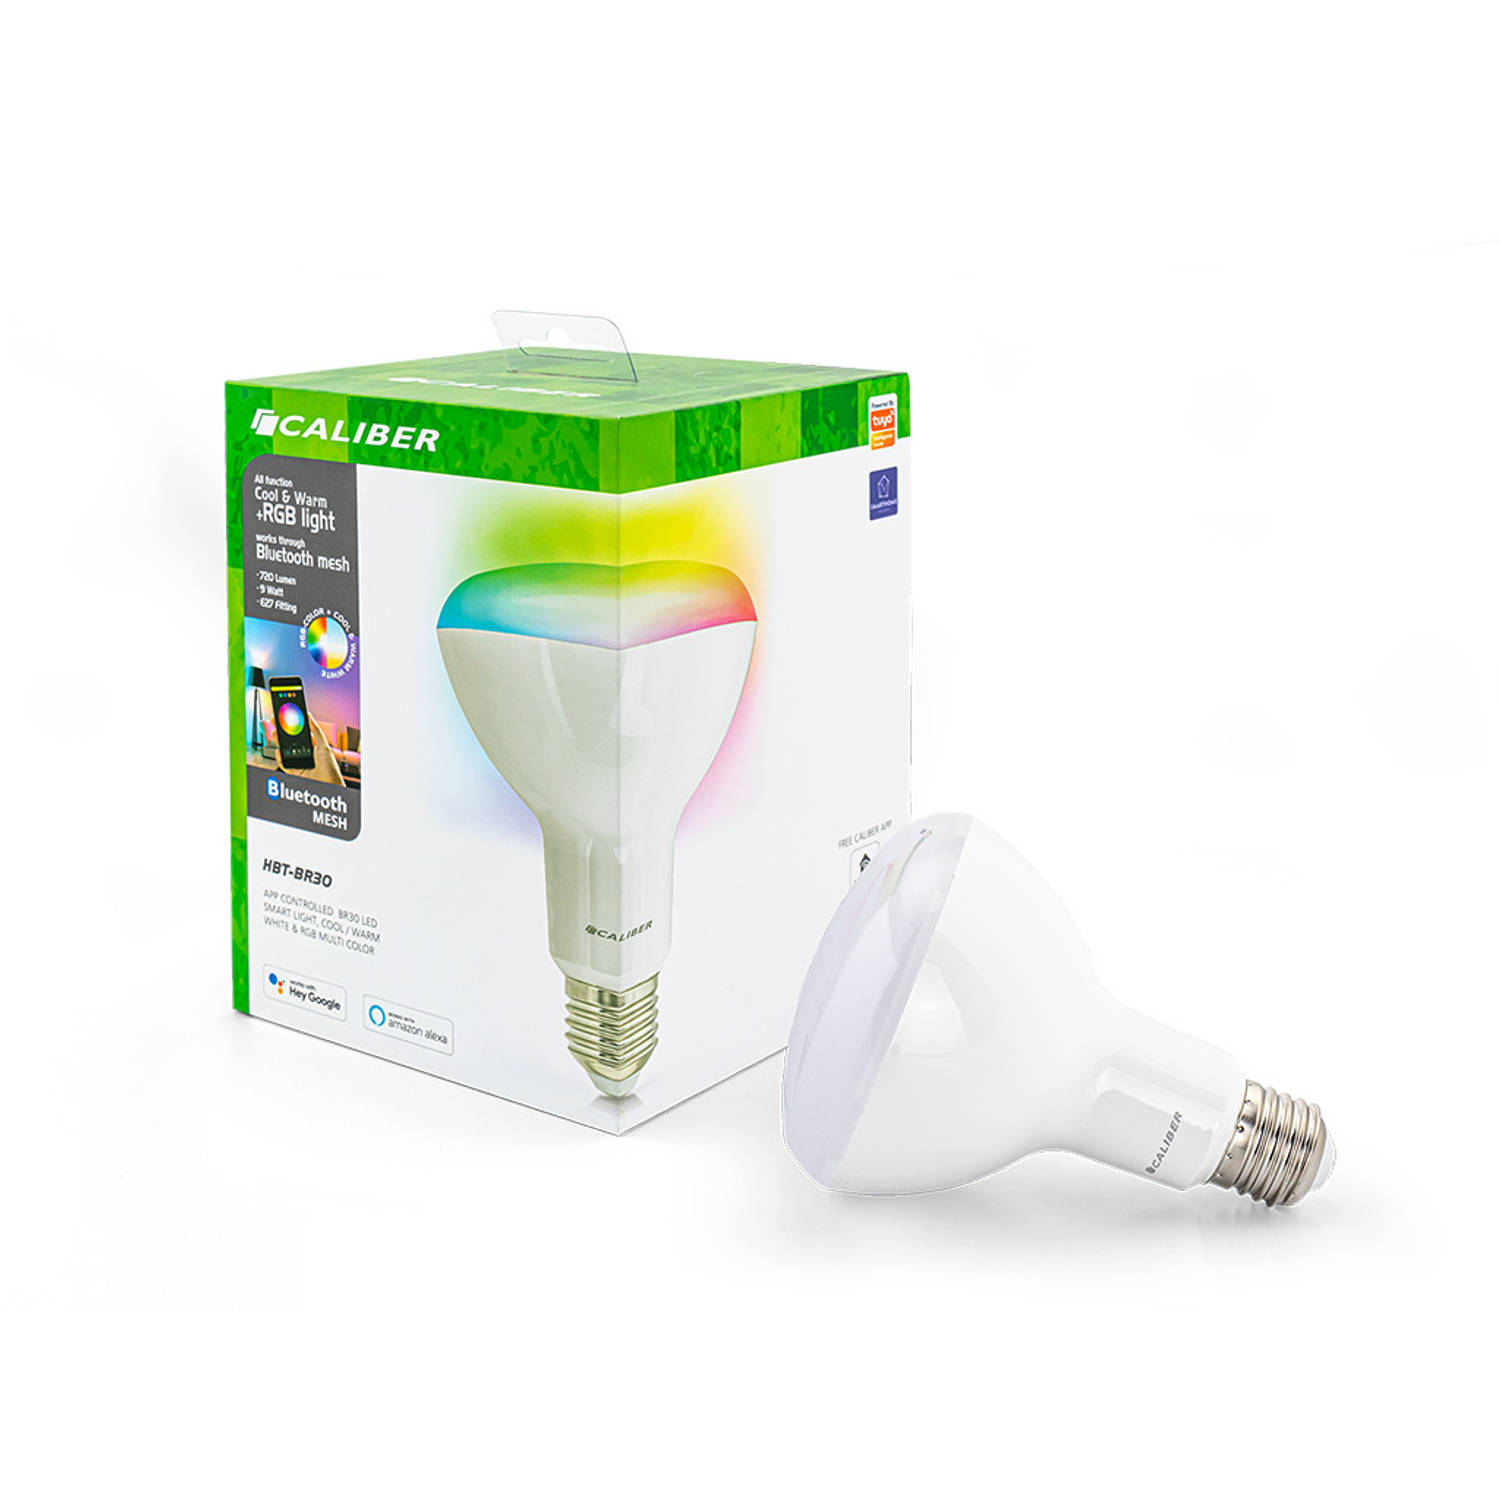 Caliber E27 Dimbare Smart Lamp met RGB LEDs - Slimme E27 LED lamp - 850 Lumen - 8 Watt - Bediening via App (HBT-BR30)